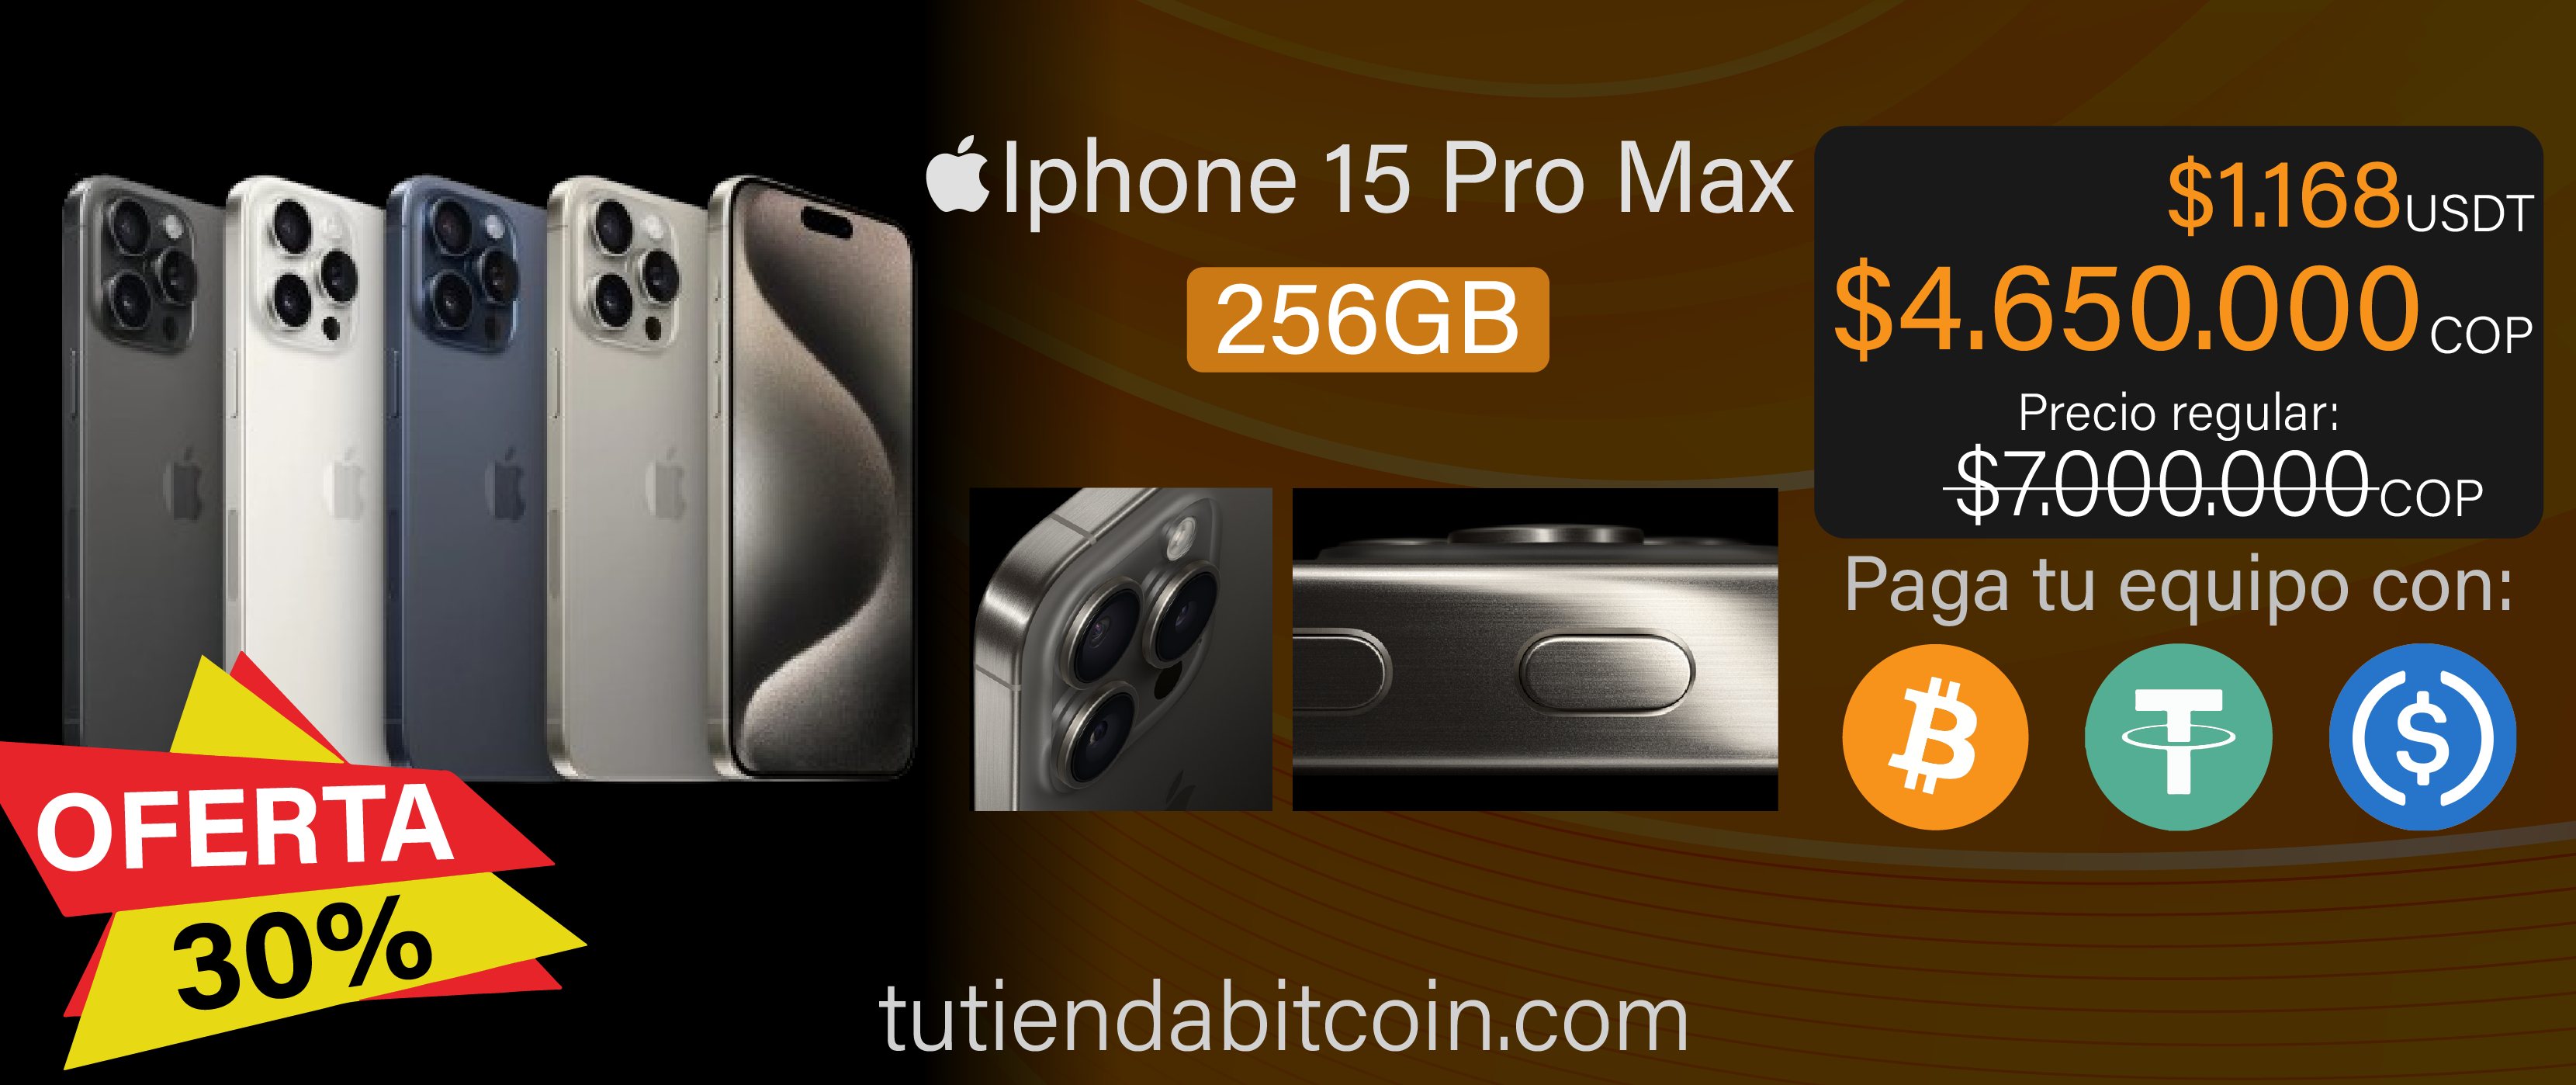 TB1 banner iphone 15 pro max